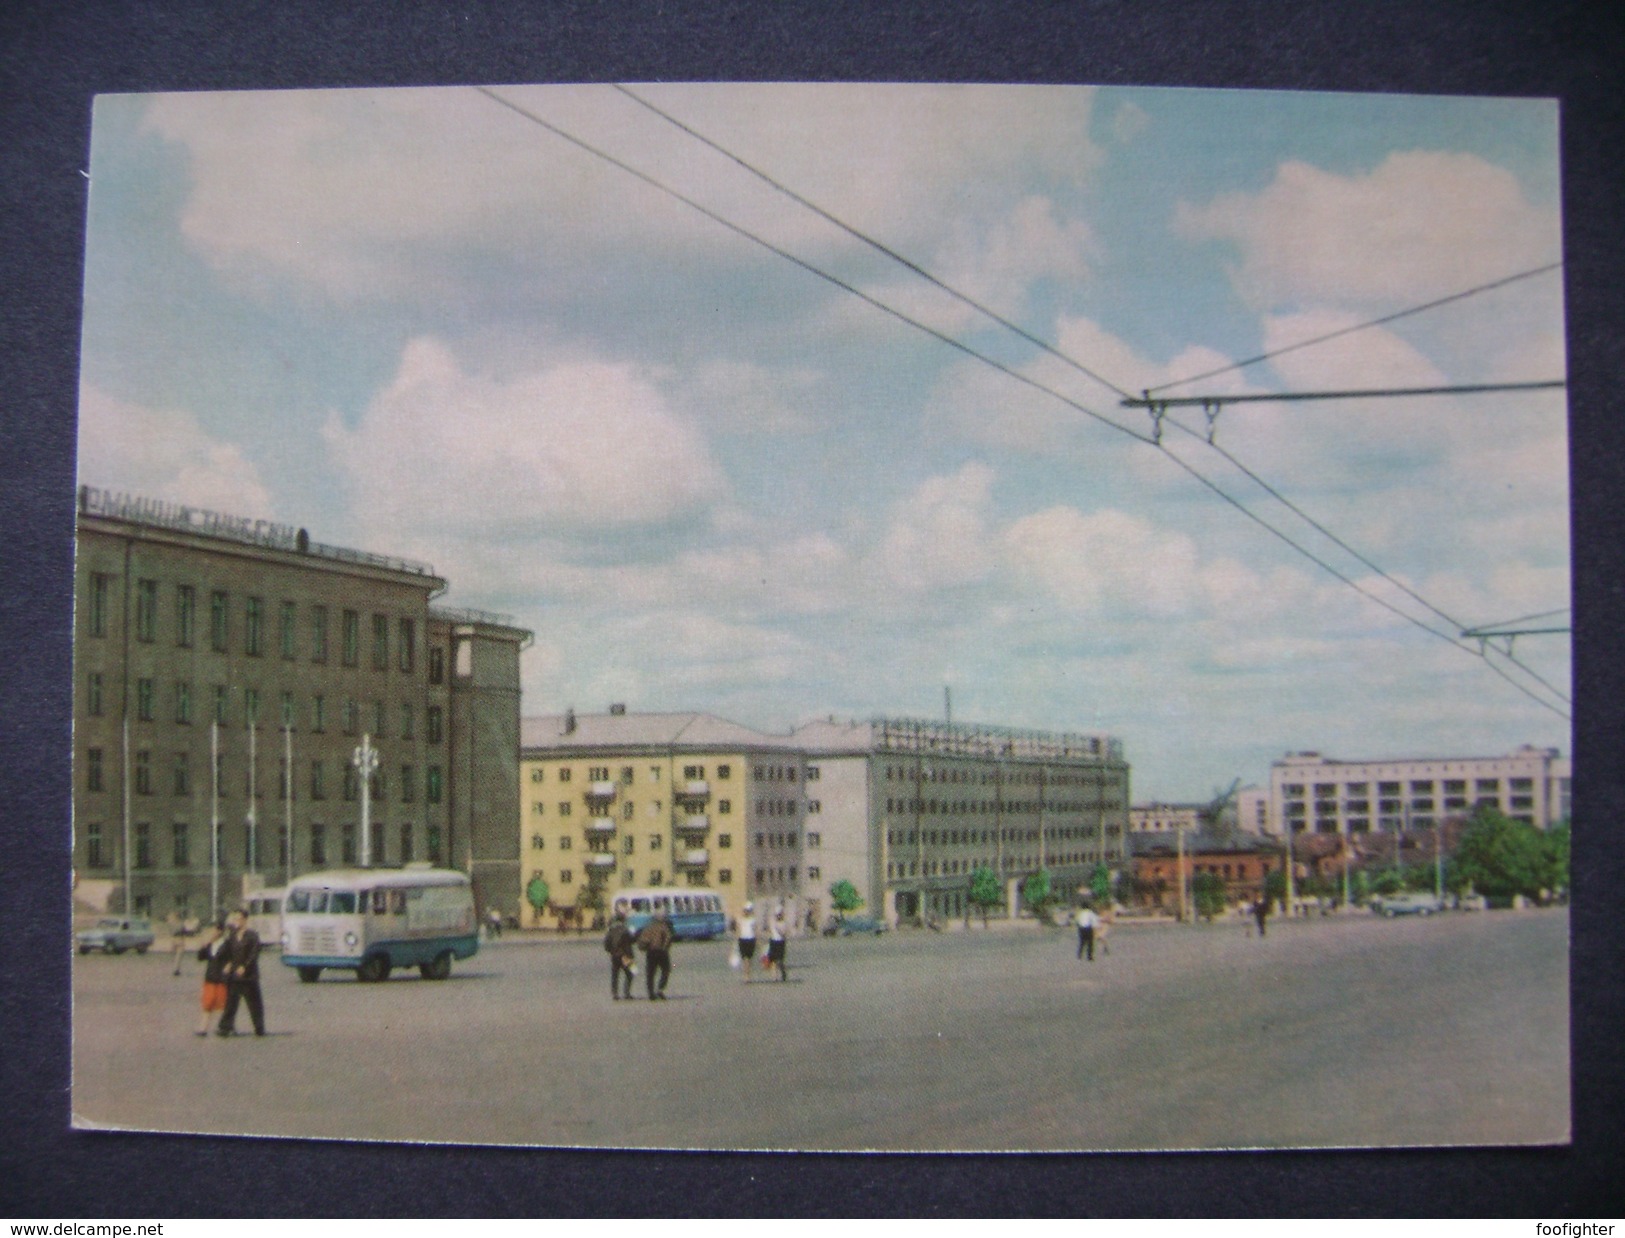 Russia (Soviet Union, USSR) - PERM - October Revolution Square - Traffic, Old Bus - 1966 Unused - Russie